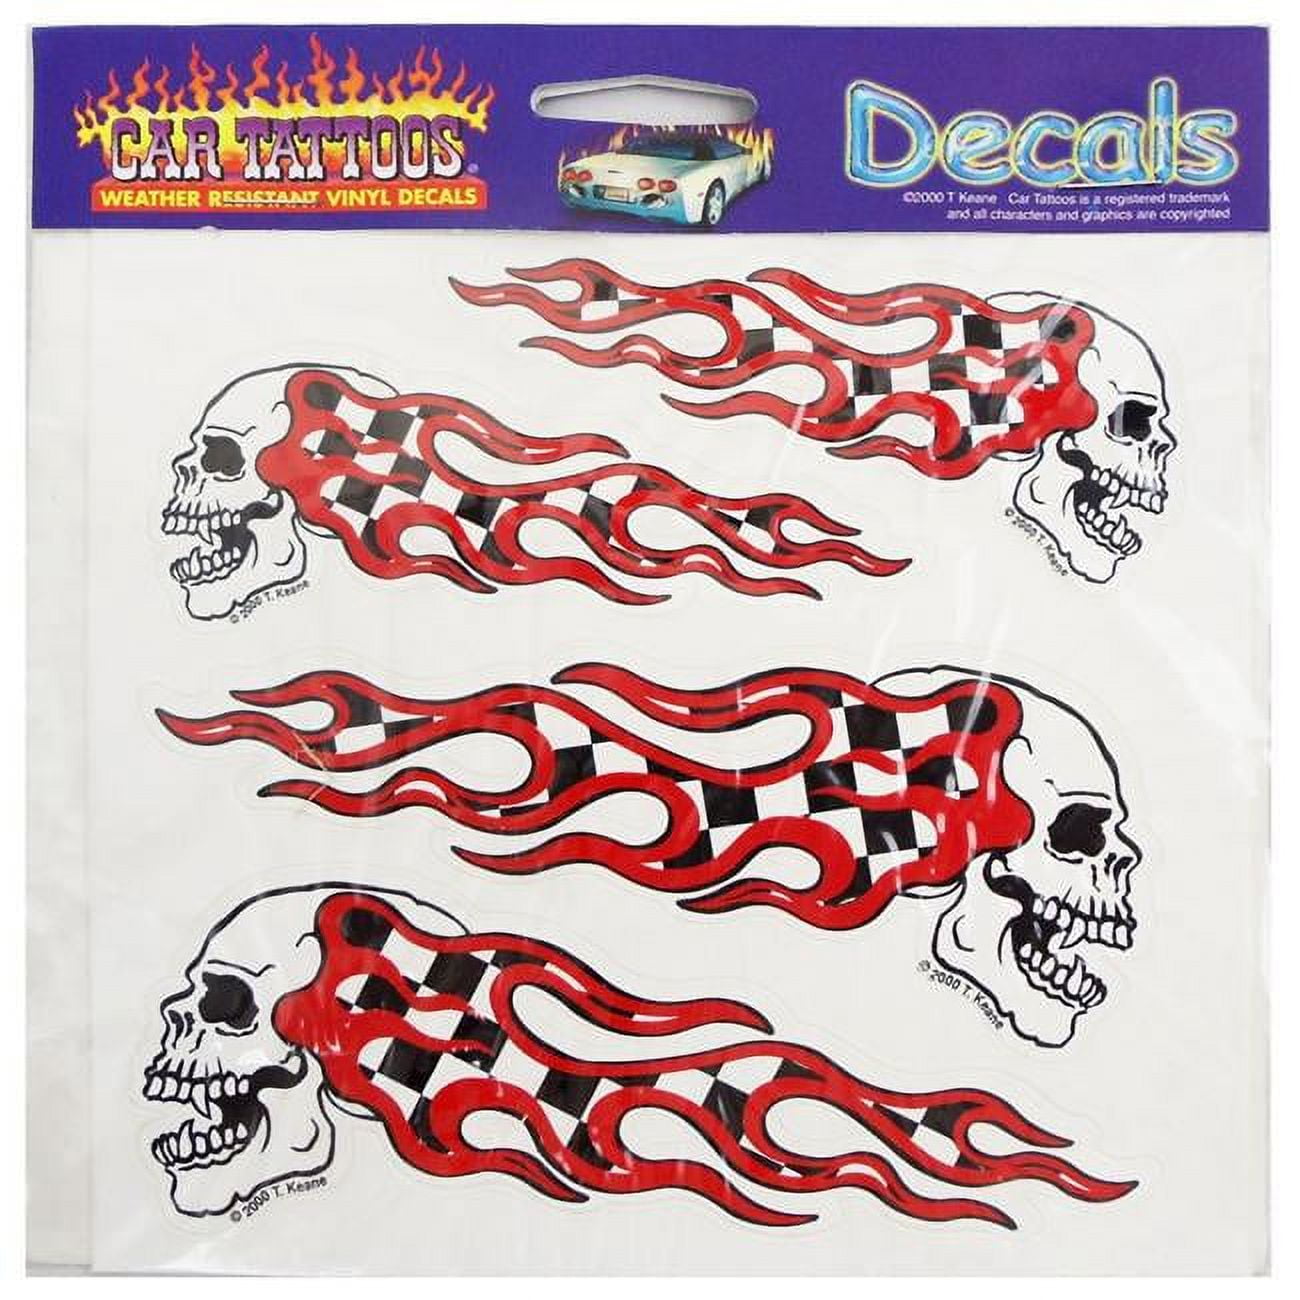 Picture of Barjan 04516401 Car Tattoos Racing Skulls Weather Resistant Vinyl Decals, 4 Piece